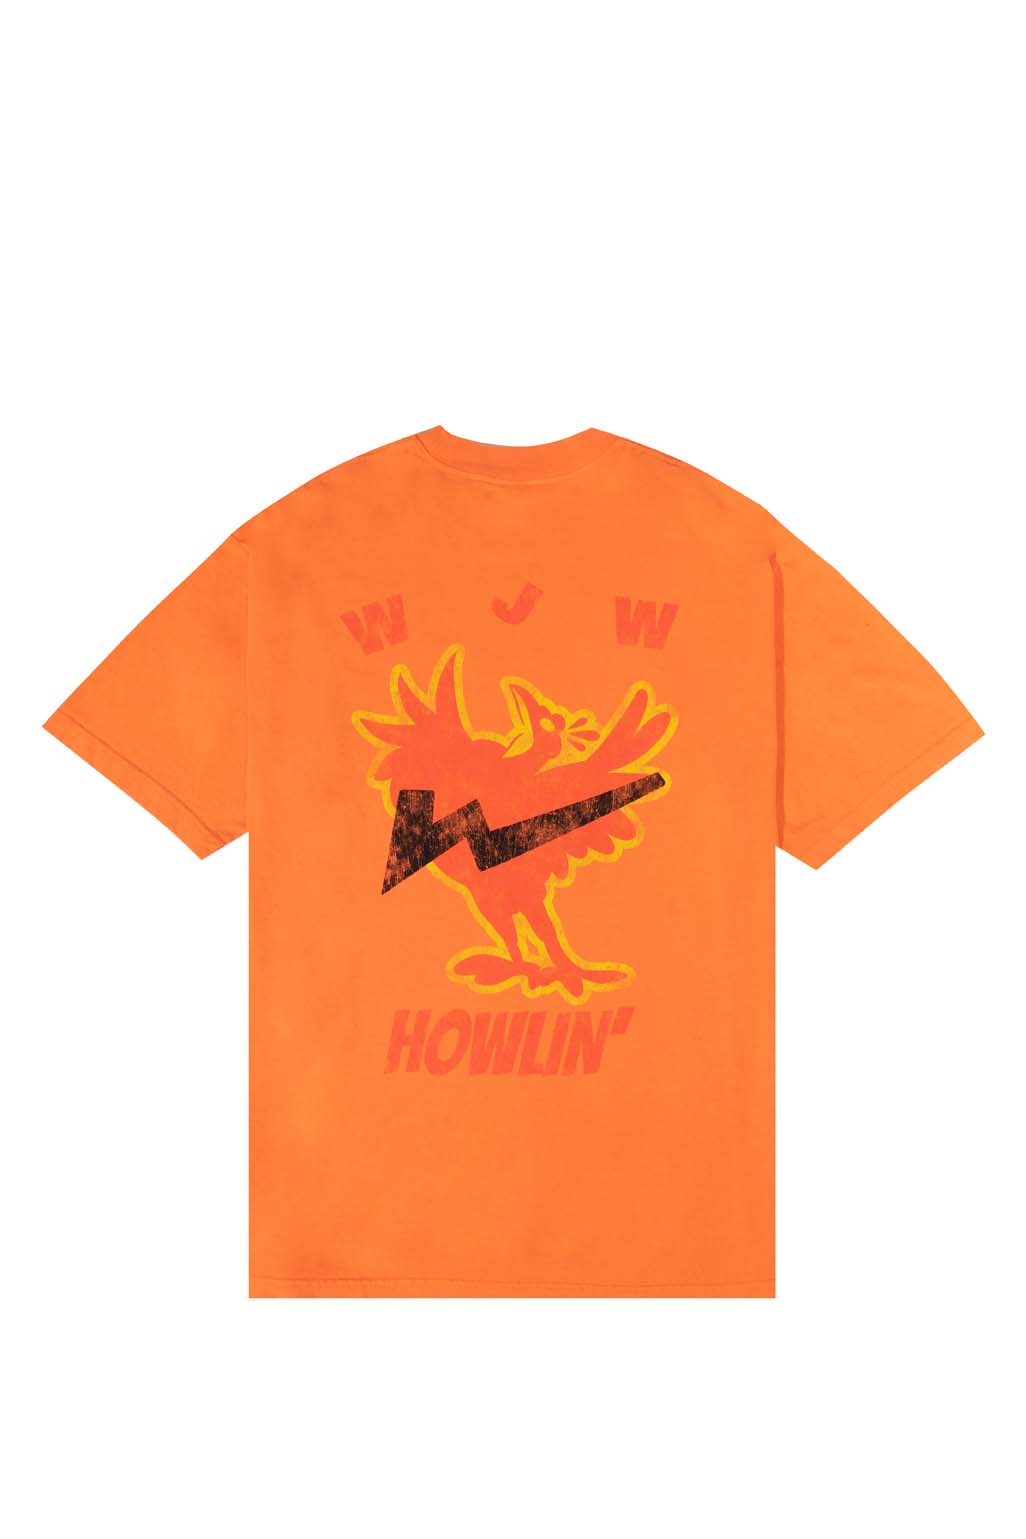 Howlin' Rays T-Shirt